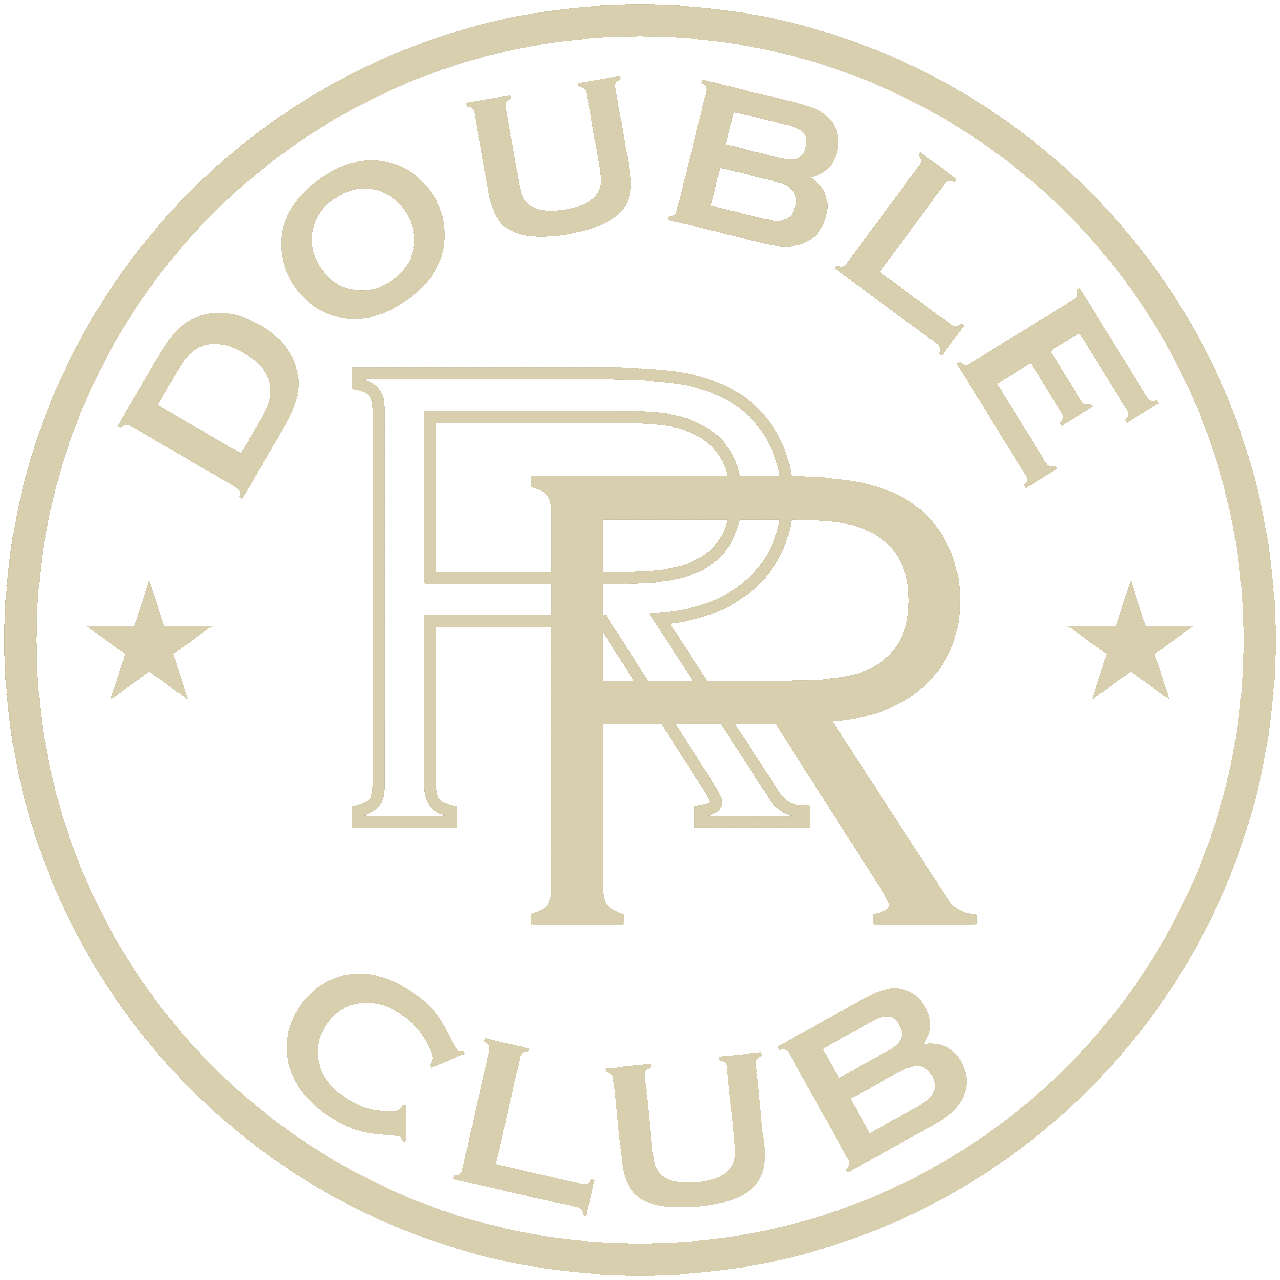 Double R Logo - DOUBLE R CLUB LOGO